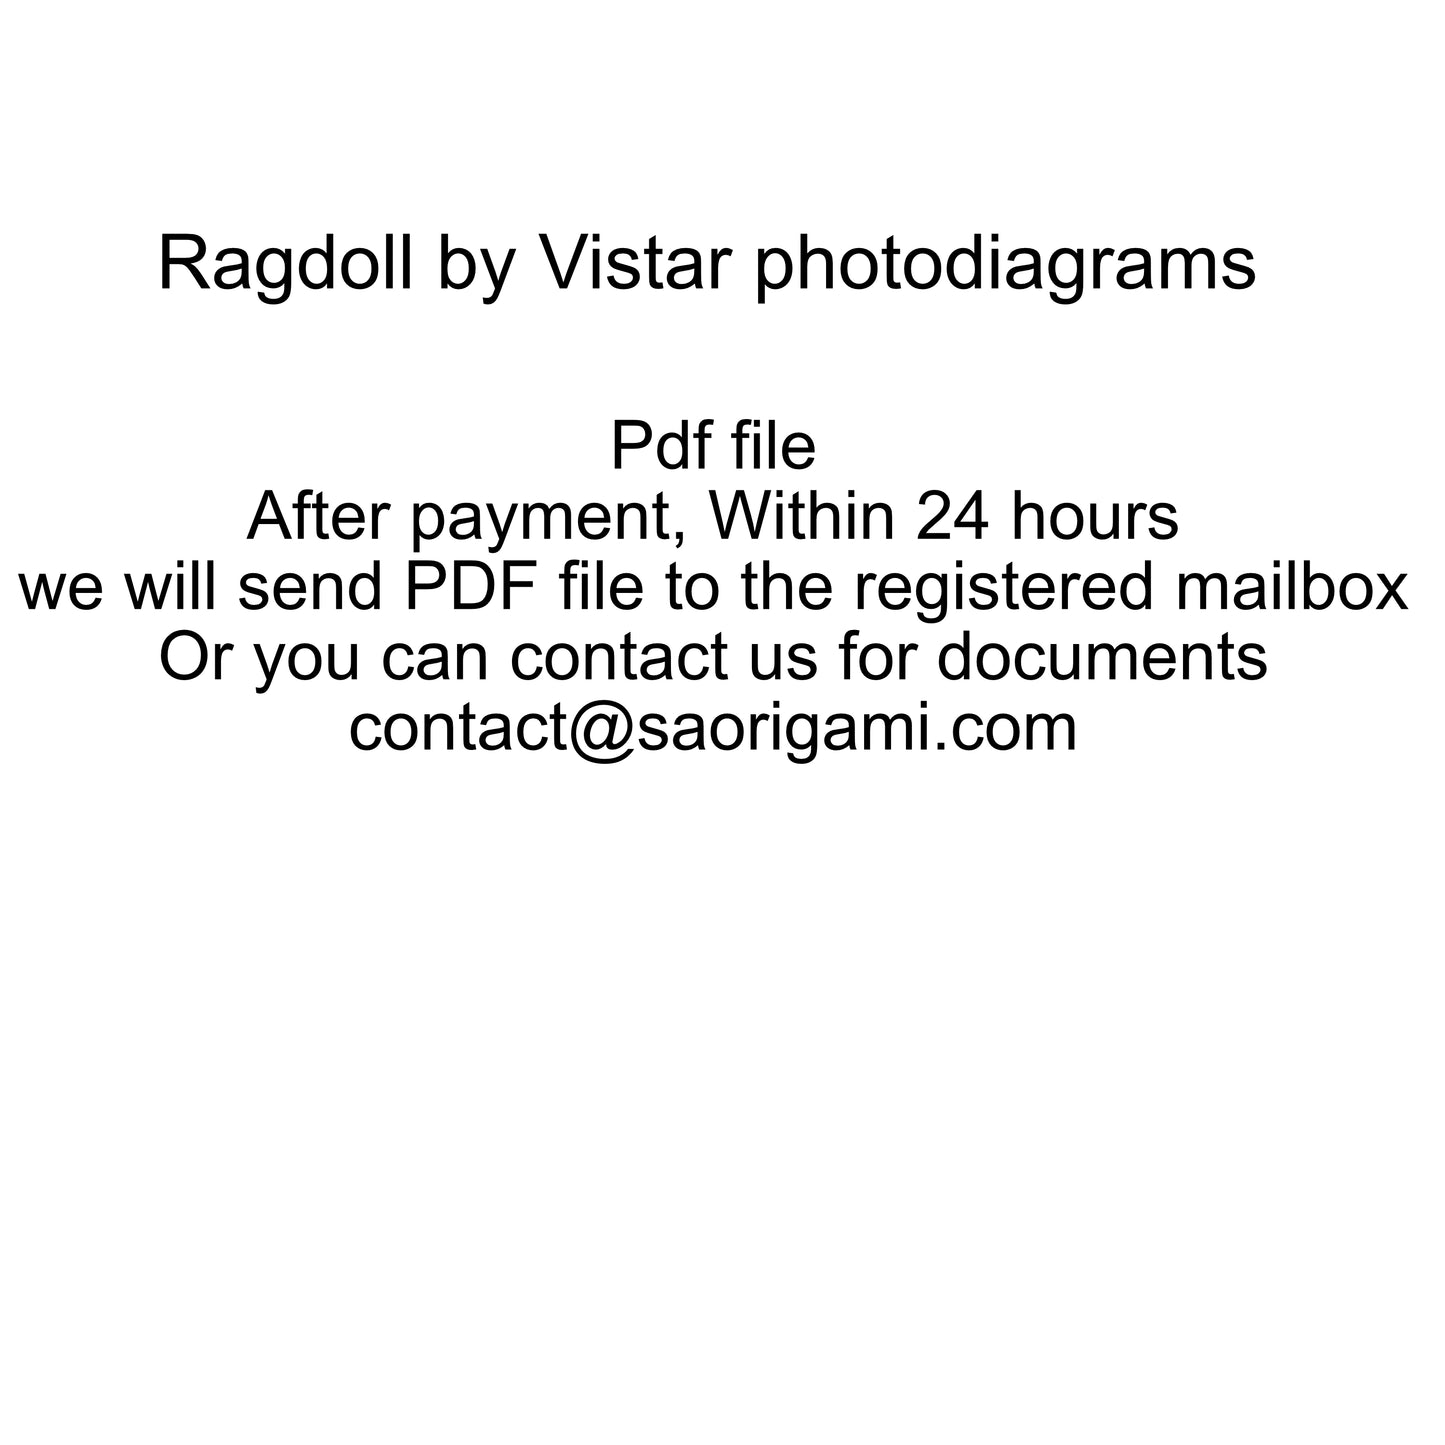 Ragdoll photodiagrams by Vistar